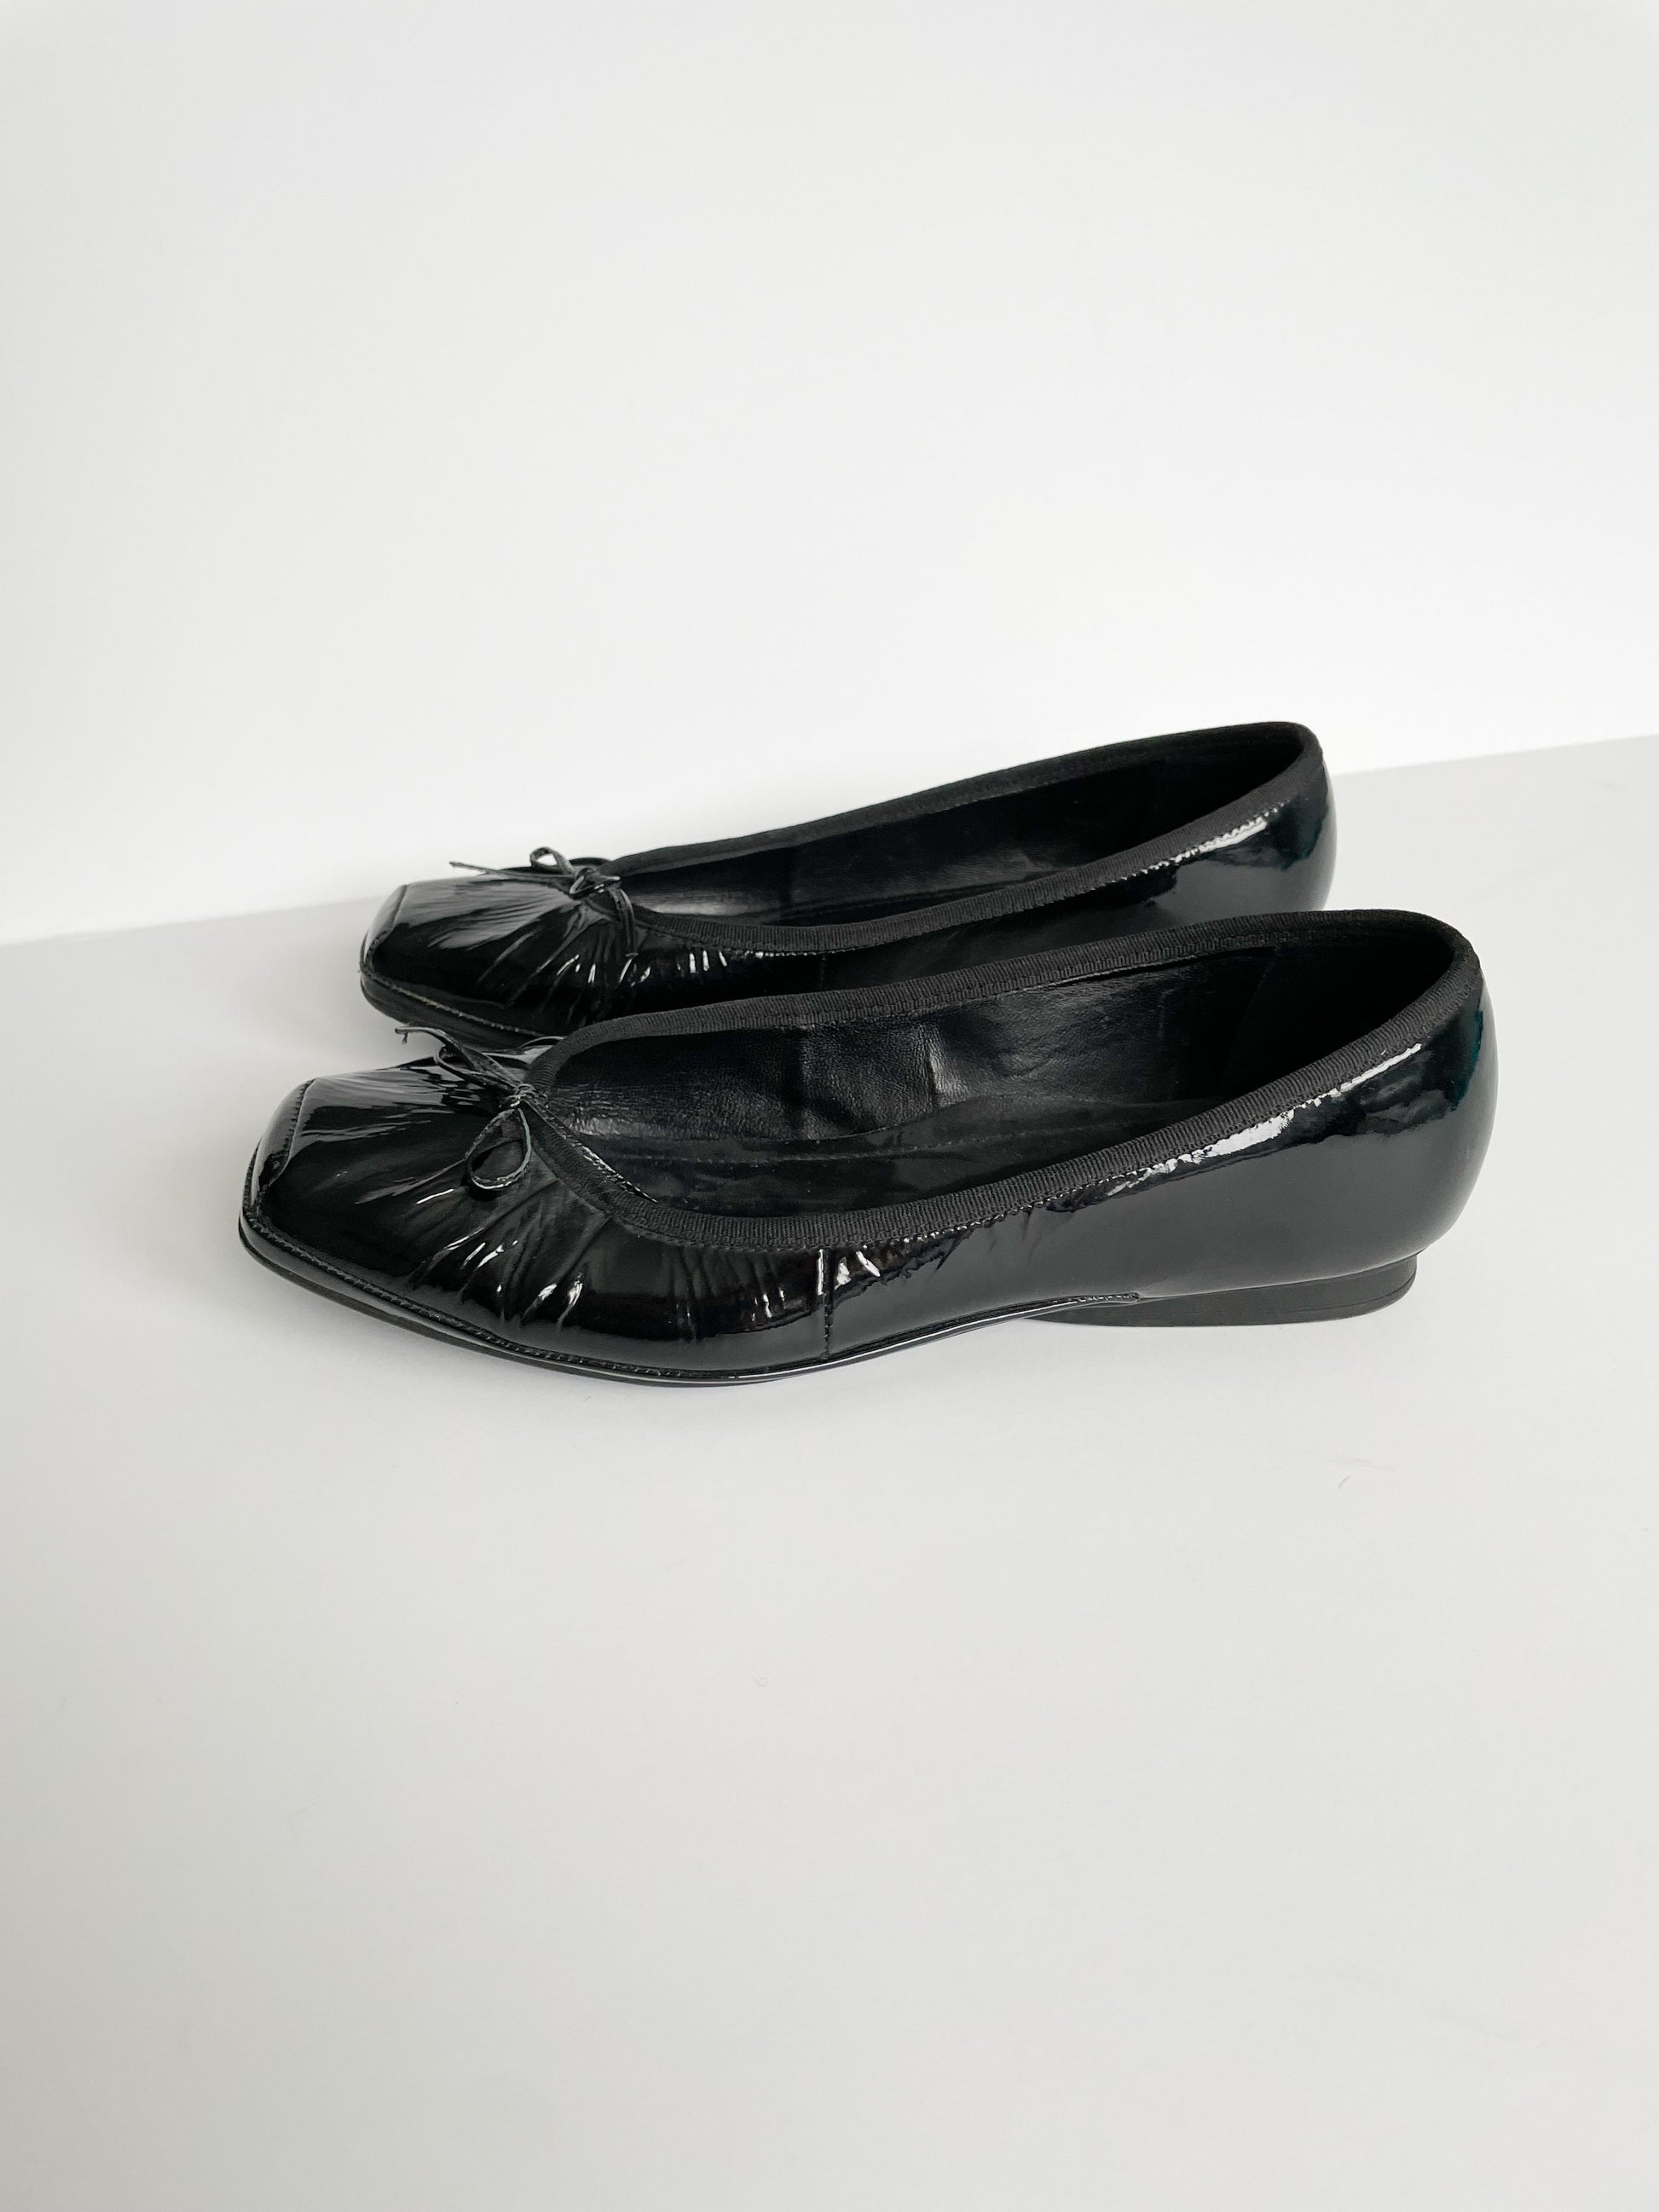 Geox Respira™ Respira Black Patent Square Toe Flats Slip On Shoes - Si – Le Prix & Consulting